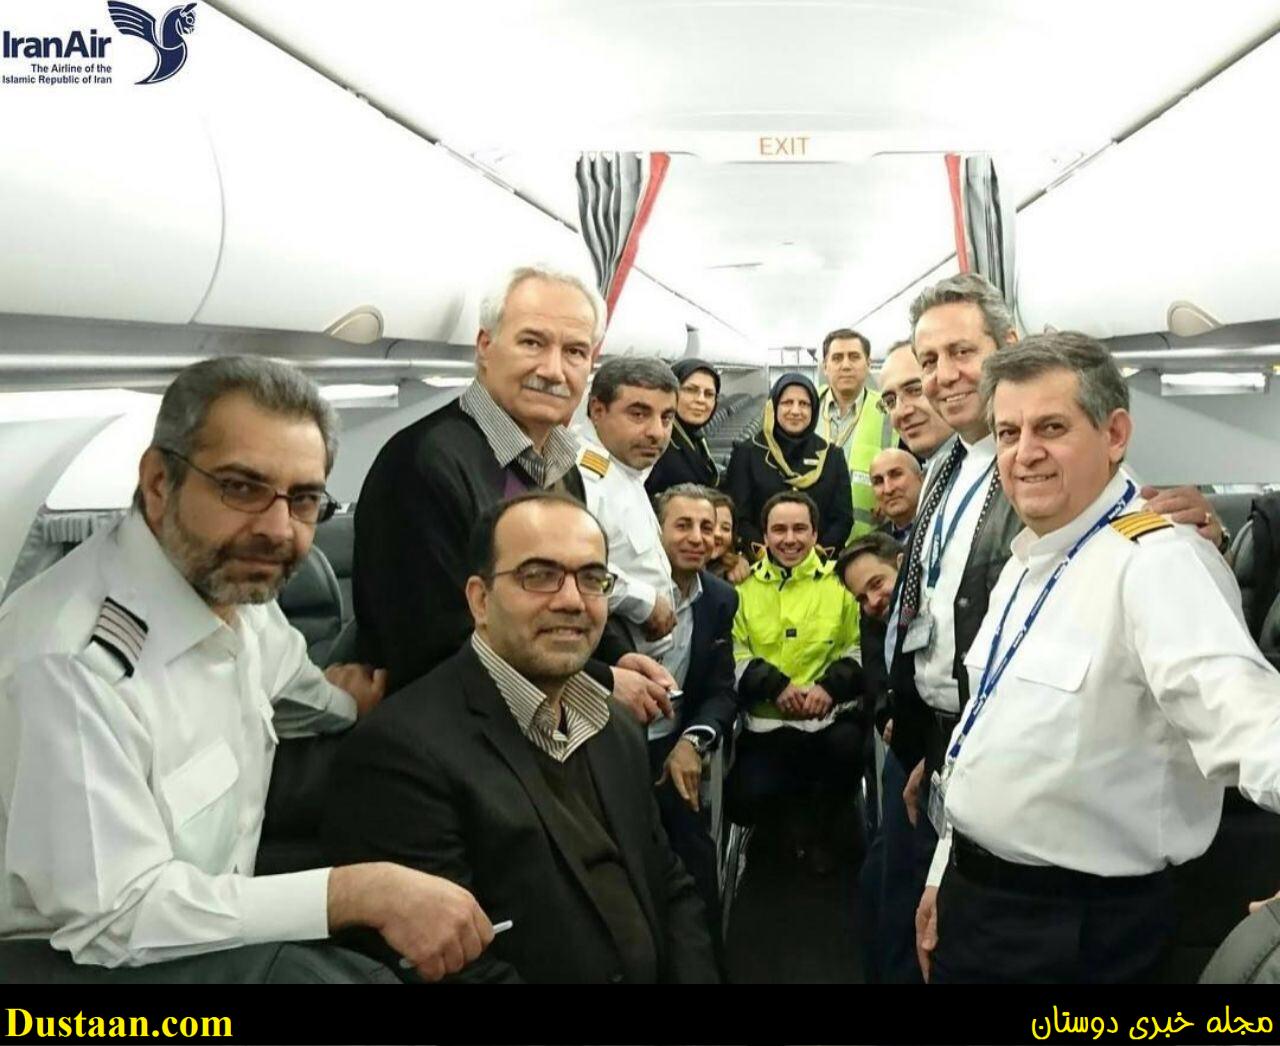 www.dustaan.com-تصویری ببینید از خلبانان و مهمانداران جدیدترین ایرباس ایران